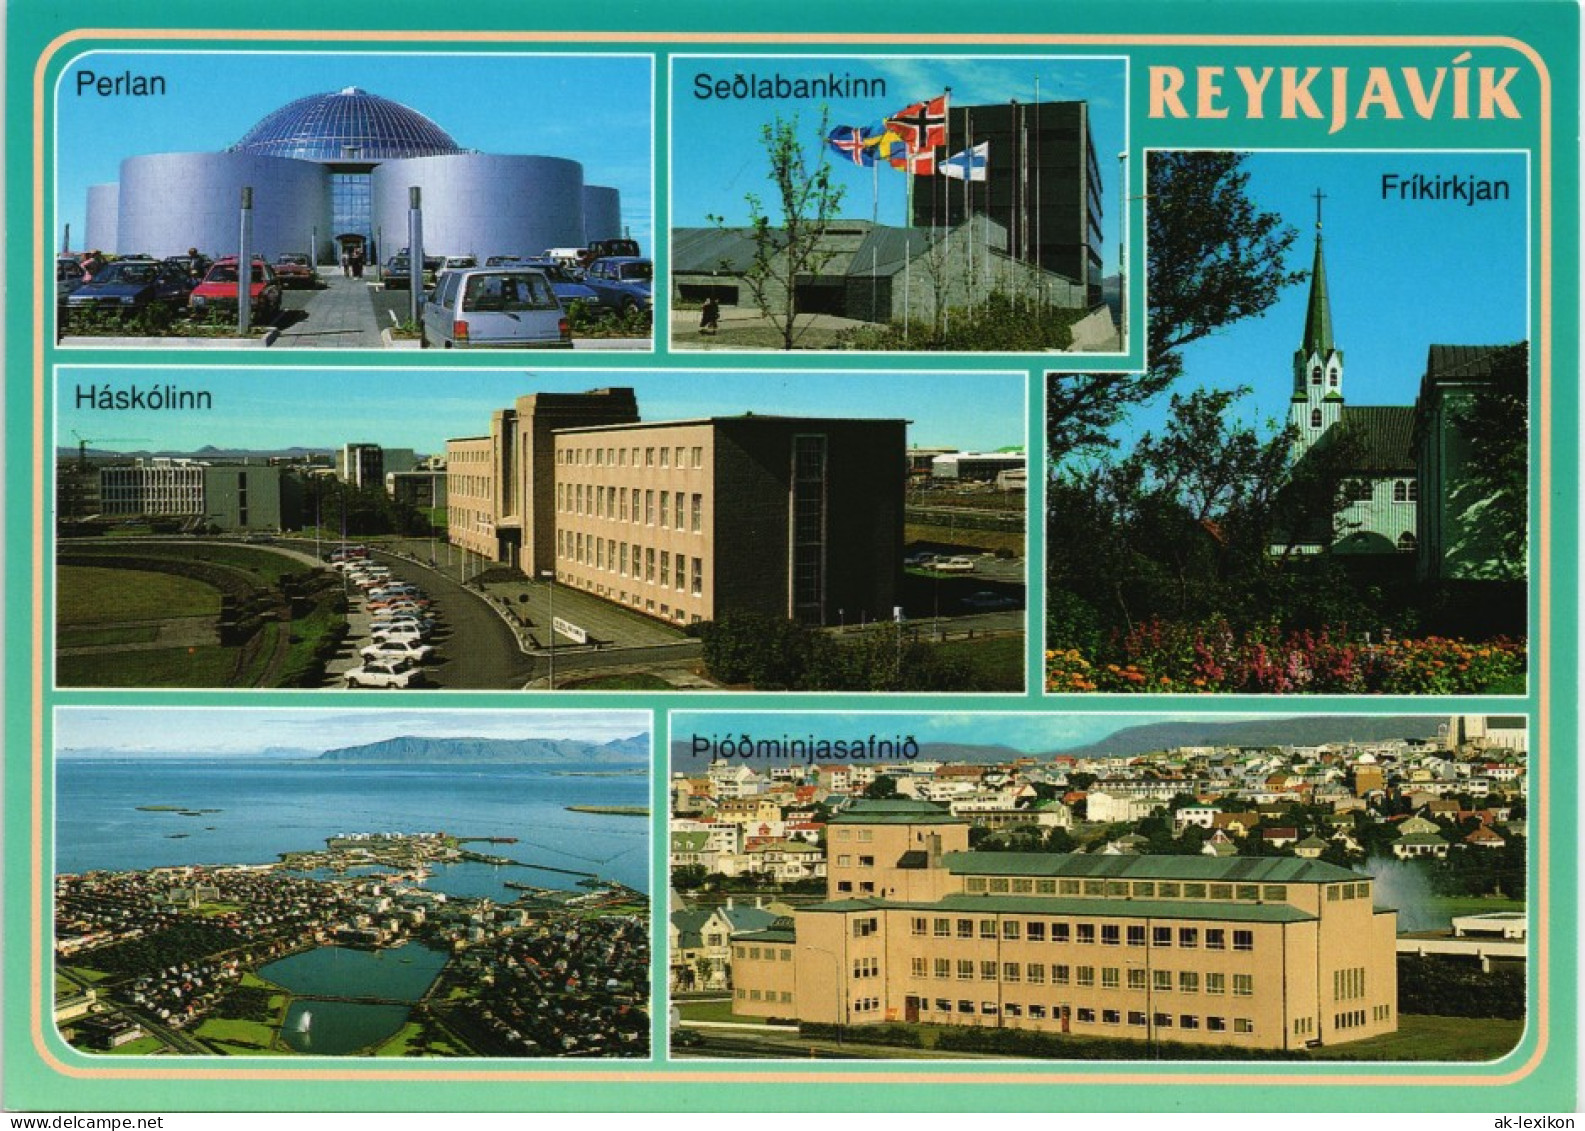 Reykjavík  Central Bank, Perlan Restaurant Uvm. Iceland Postcard 2000 - Islande